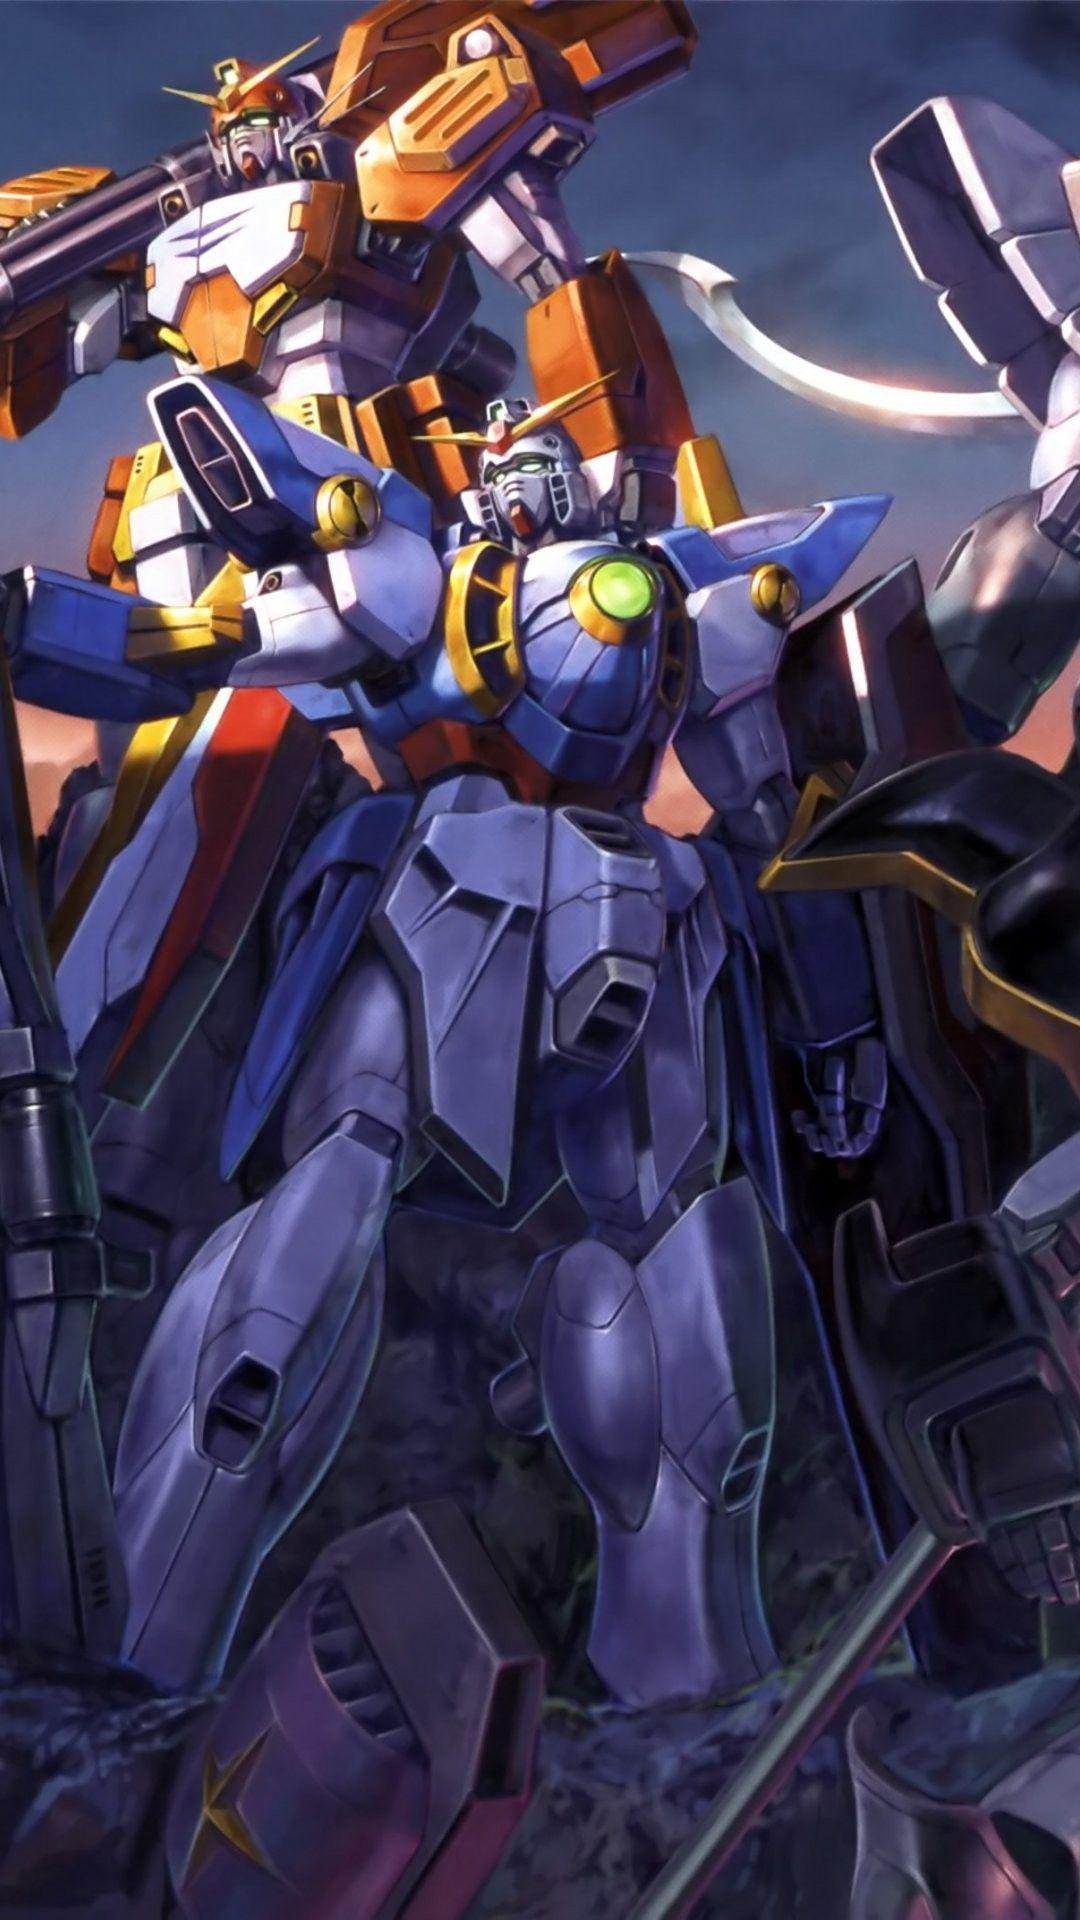 1080x1920 Gundam Hình nền iPhone 6 Plus 10616 - Anime iPhone 6 Plus